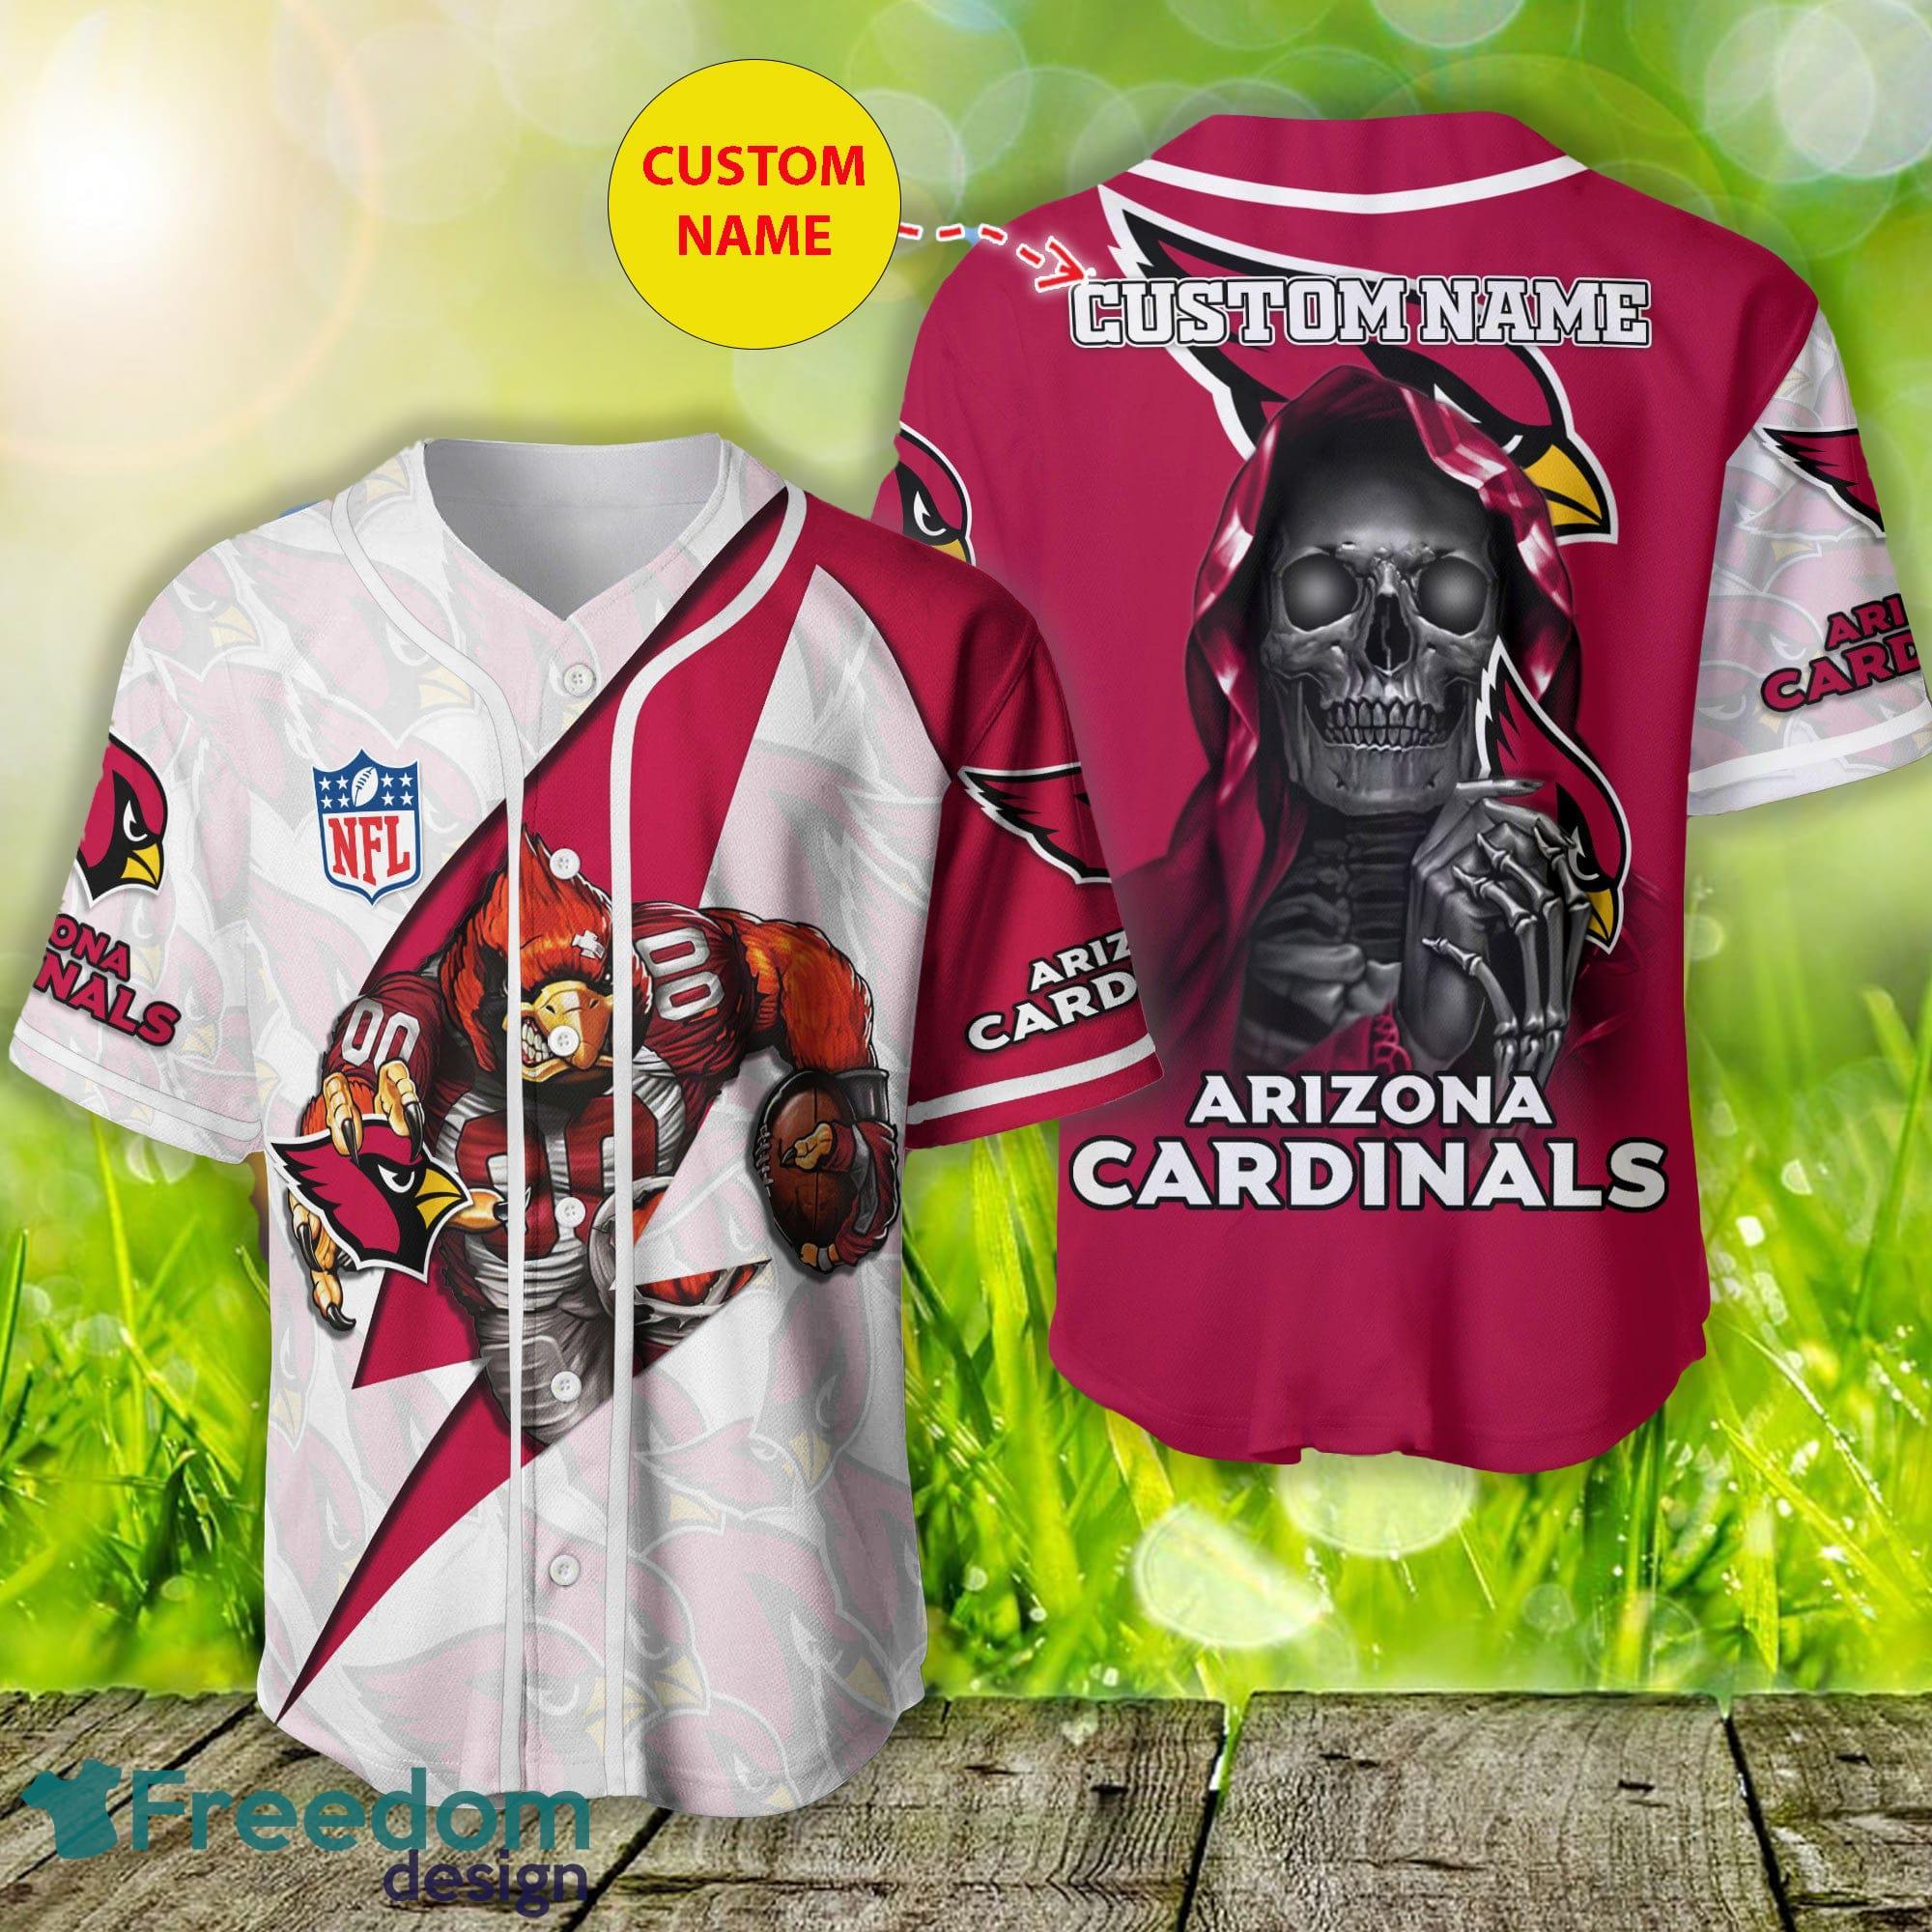 Personalized Arizona Cardinals Baseball Jersey shirt for fans